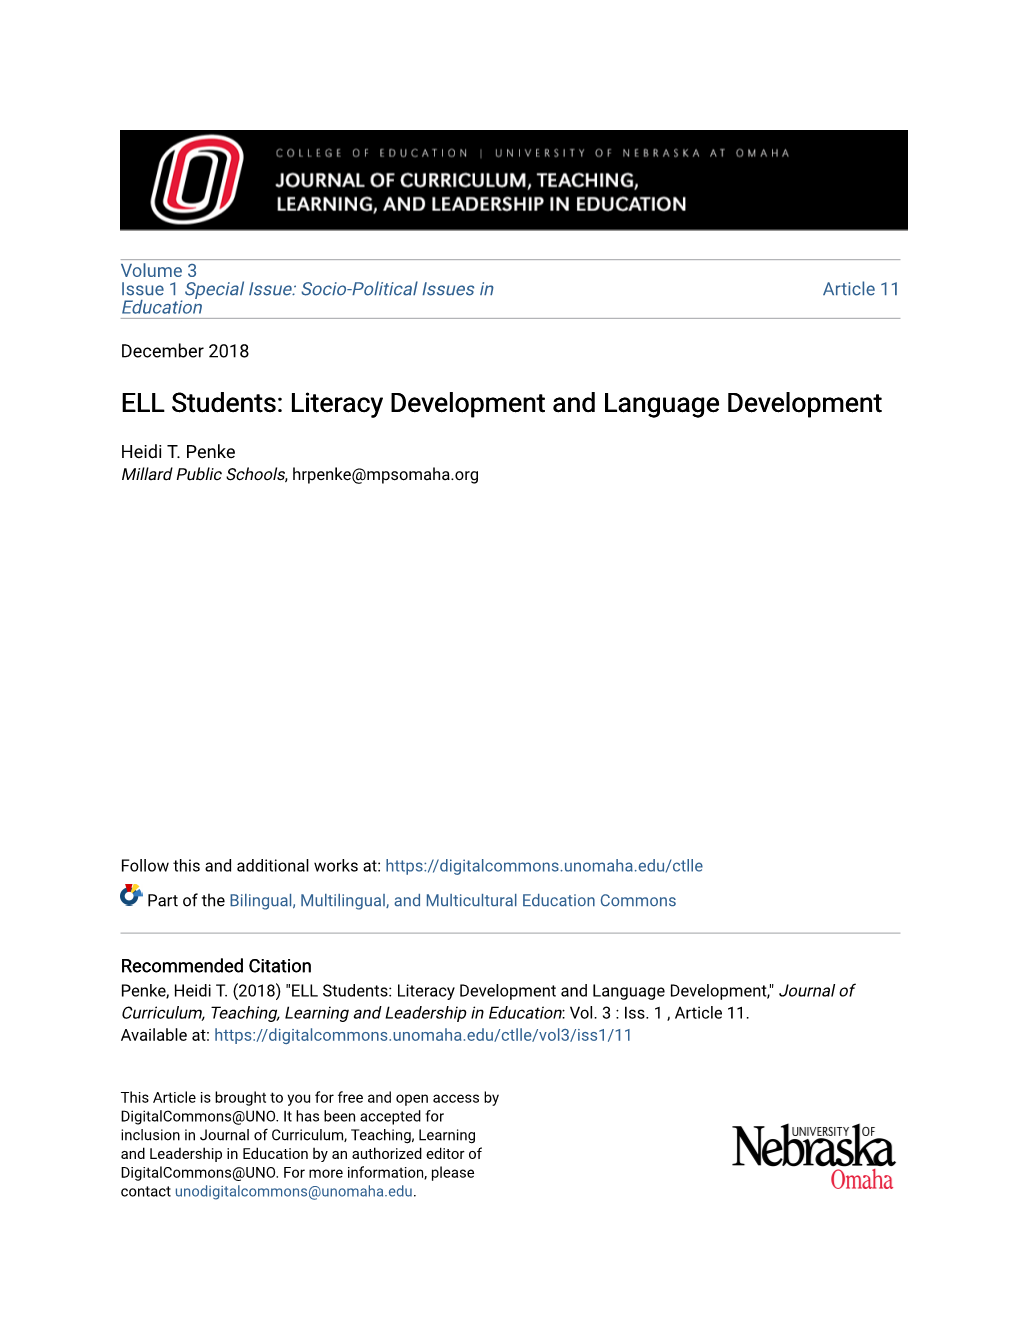 ELL Students: Literacy Development and Language Development